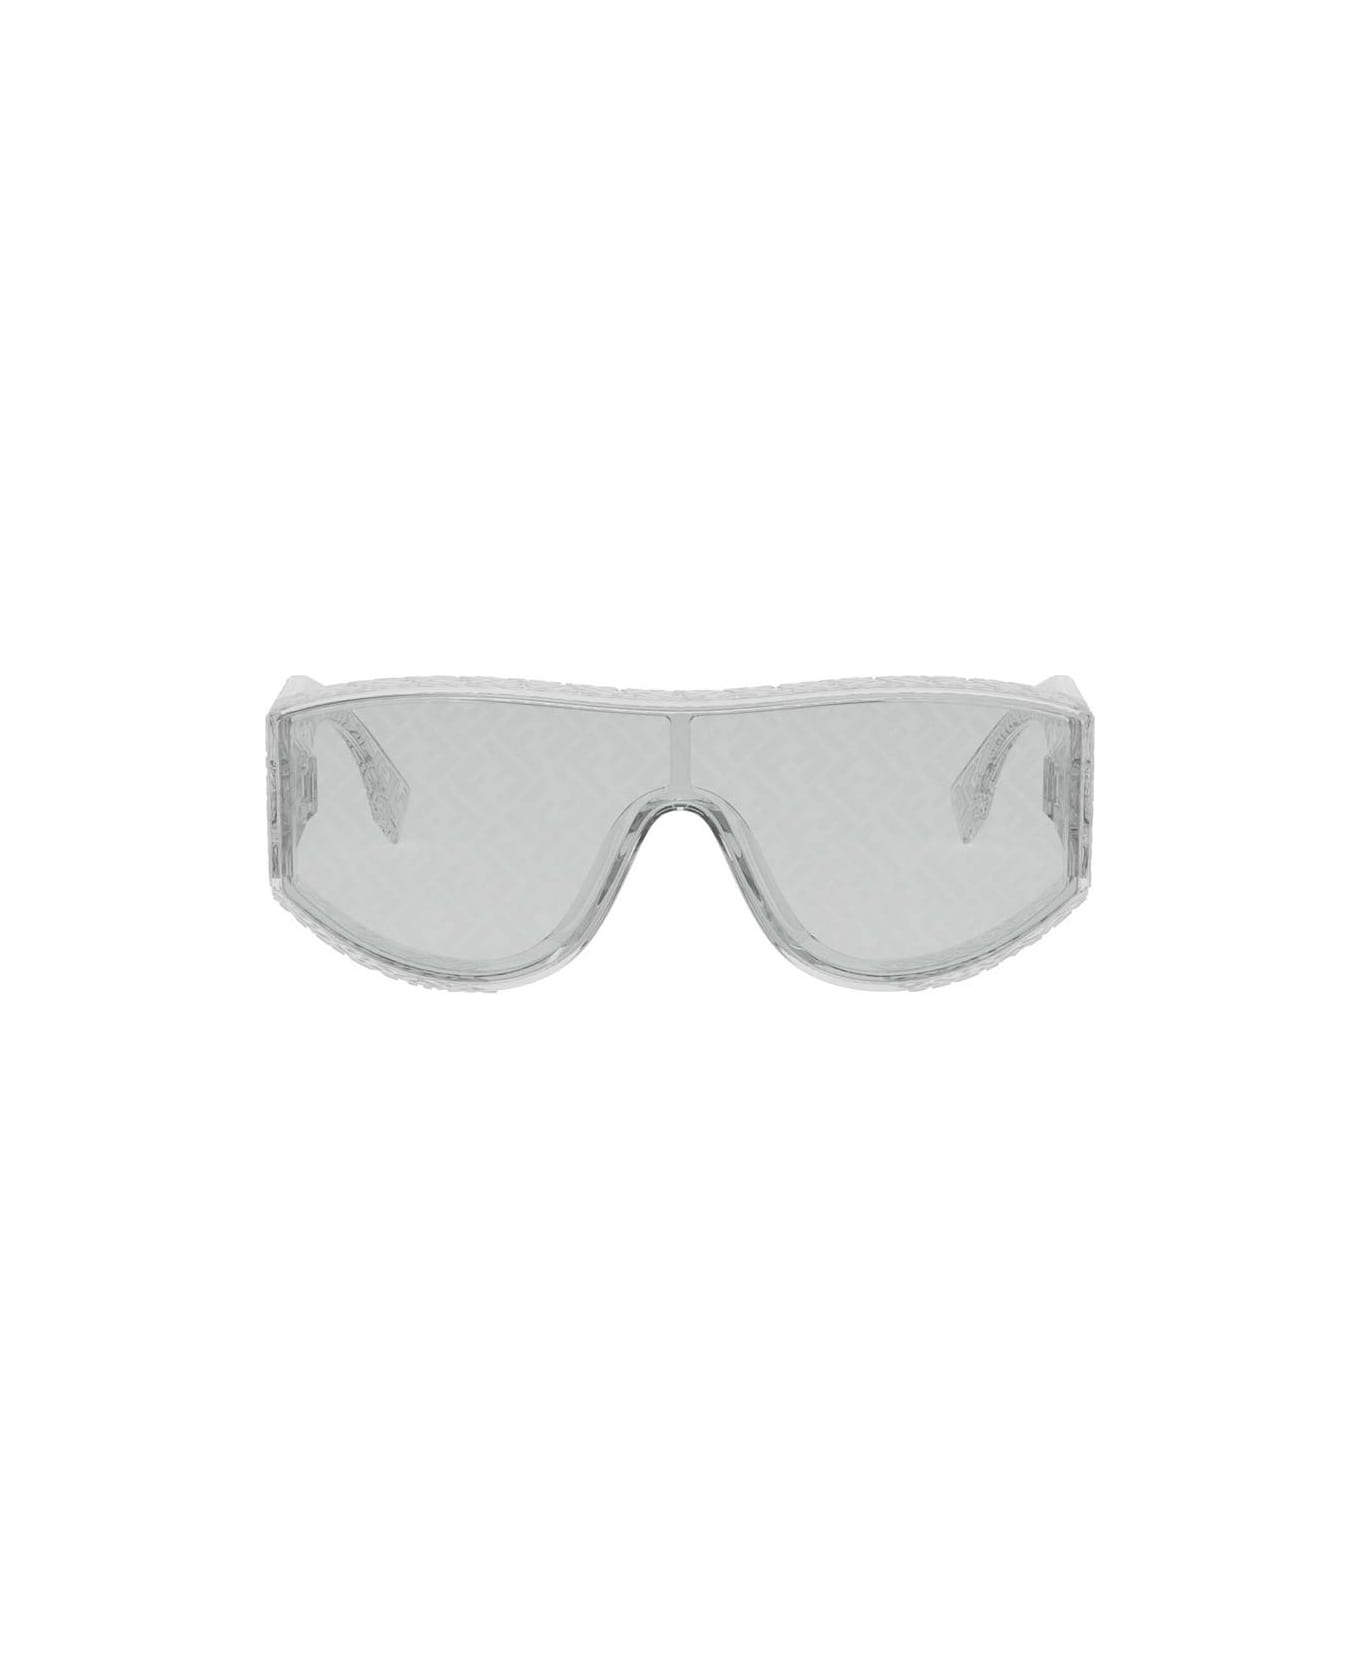 Fendi Eyewear Sunglasses - Trasparente/Silver サングラス